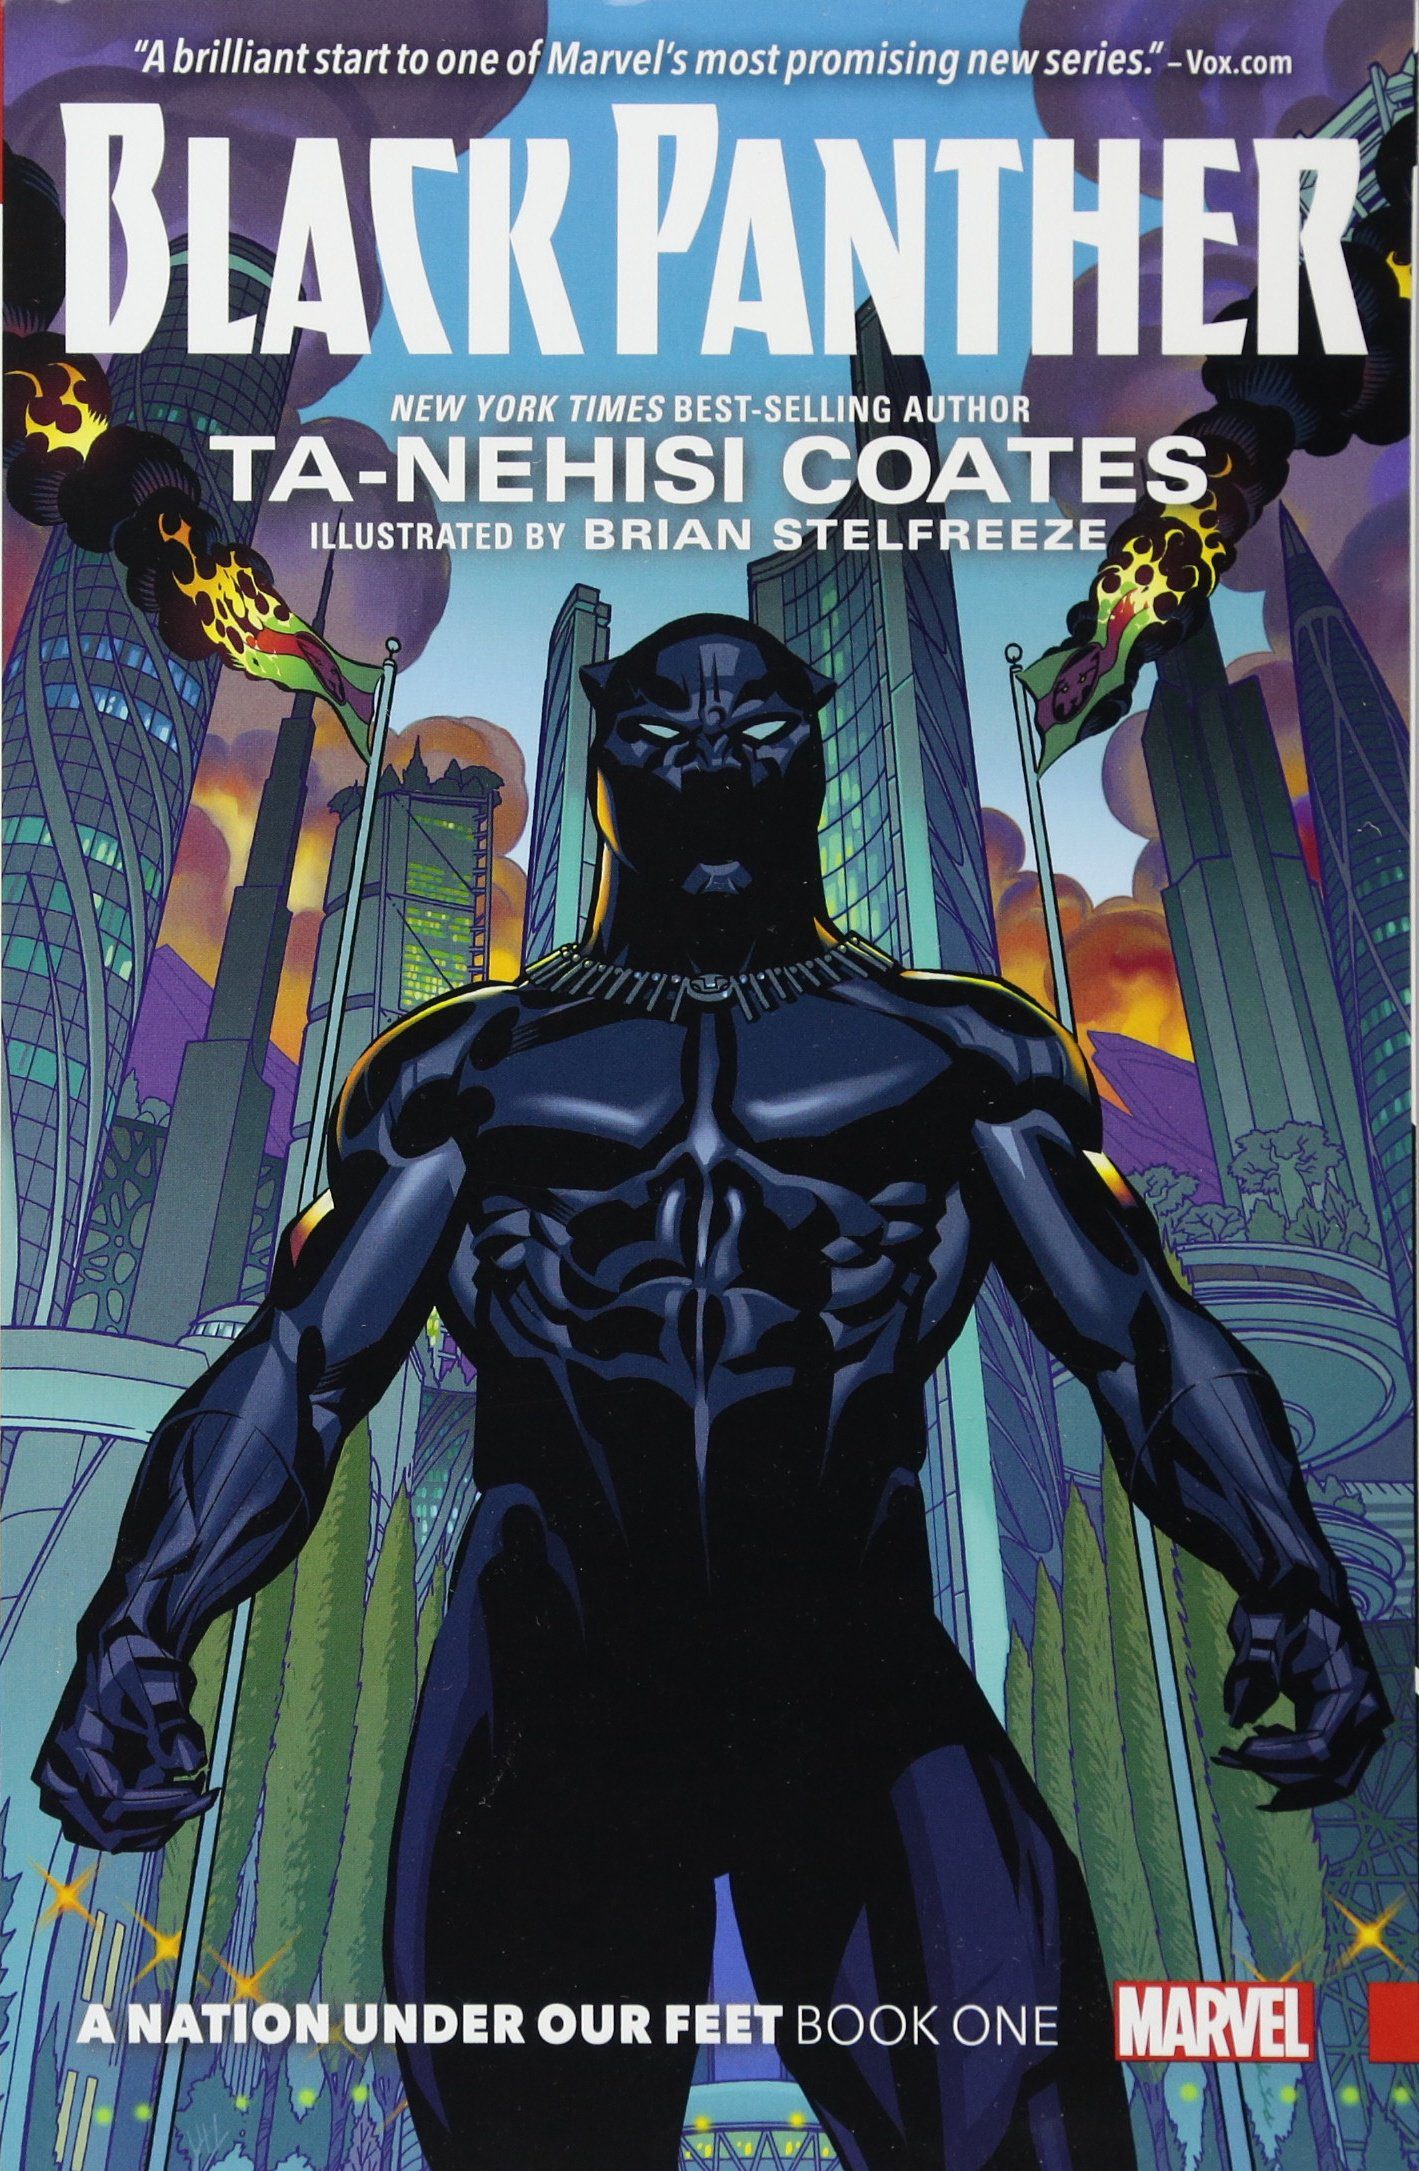 Black Panther comics cover